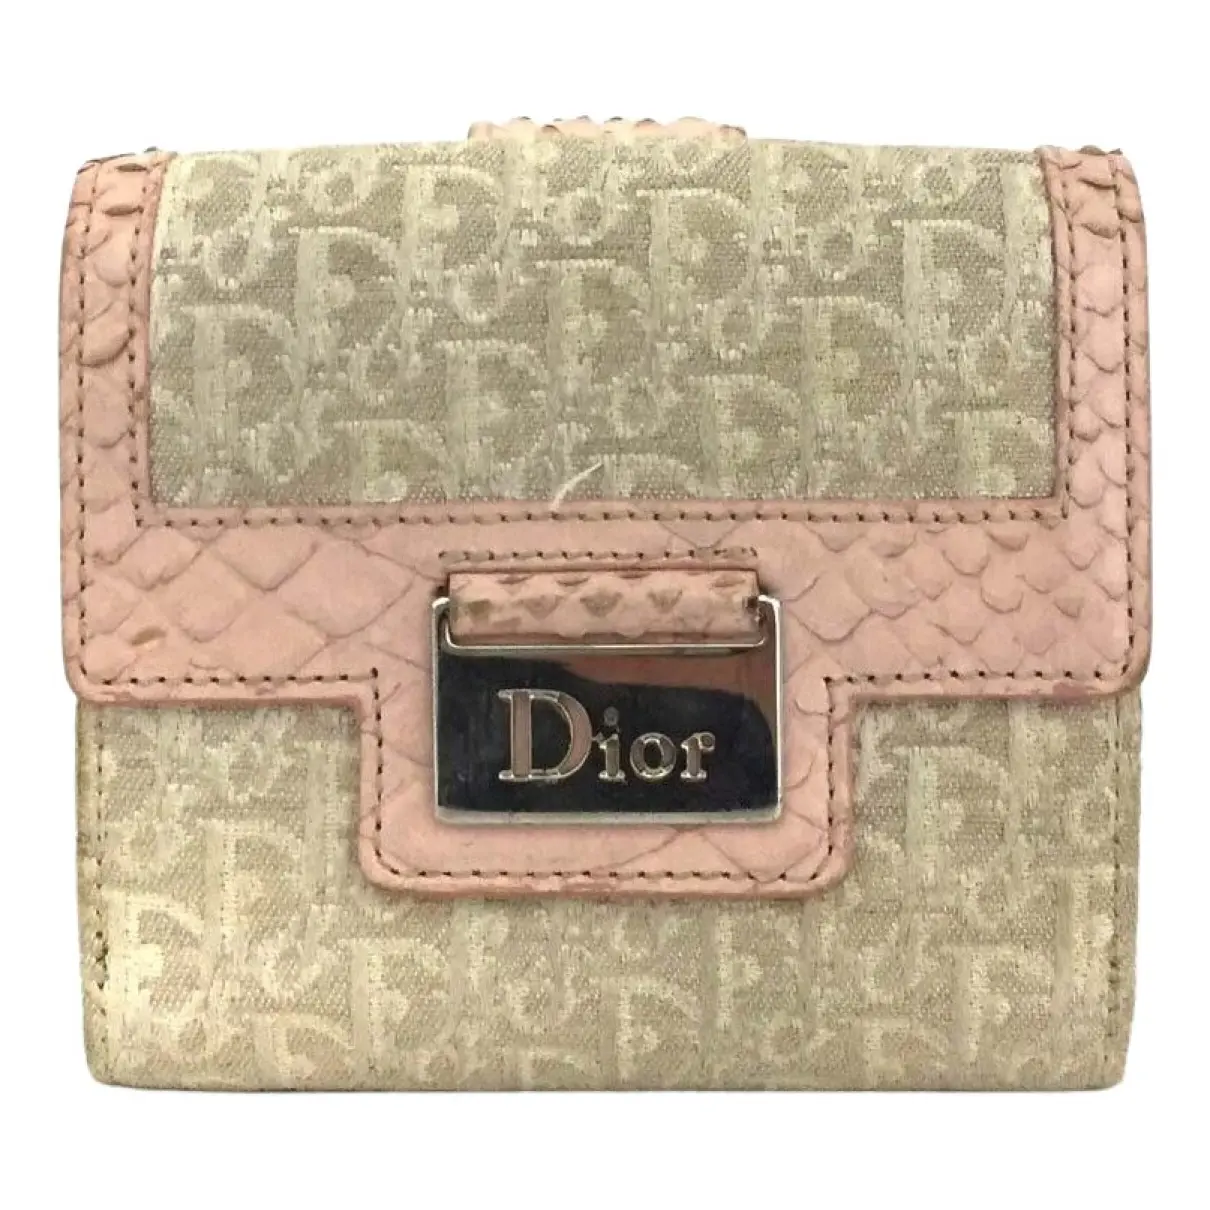 Diorissimo cloth wallet